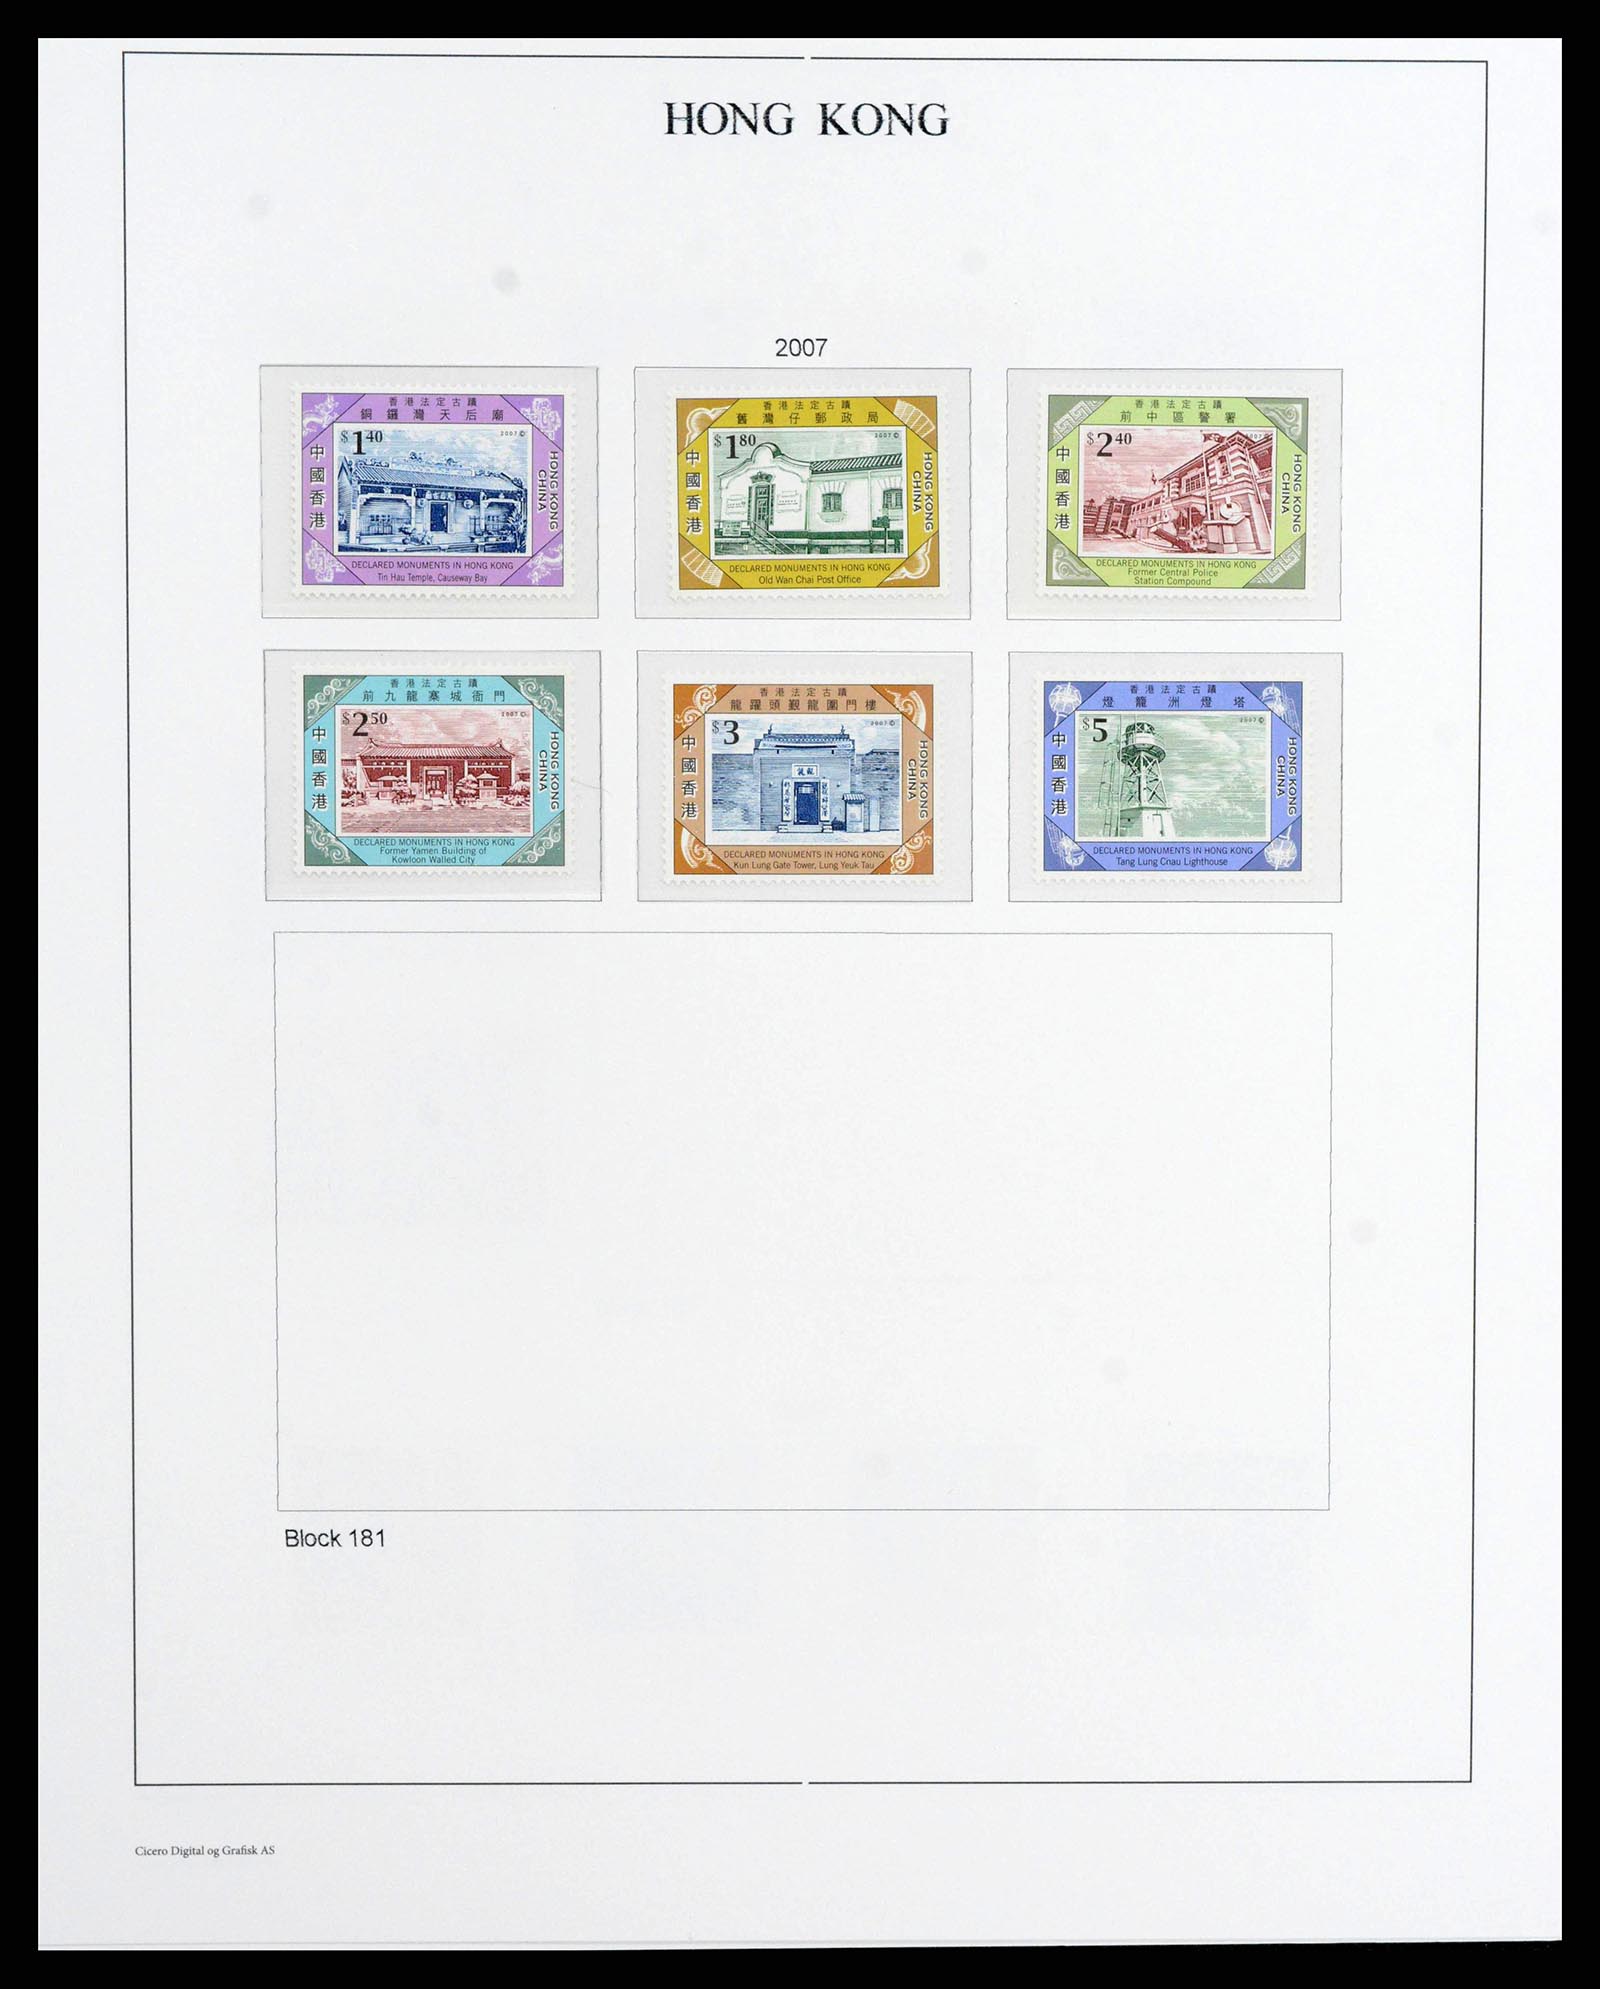 37955 0274 - Stamp collection 37955 Hong Kong supercollection 1862-2007.